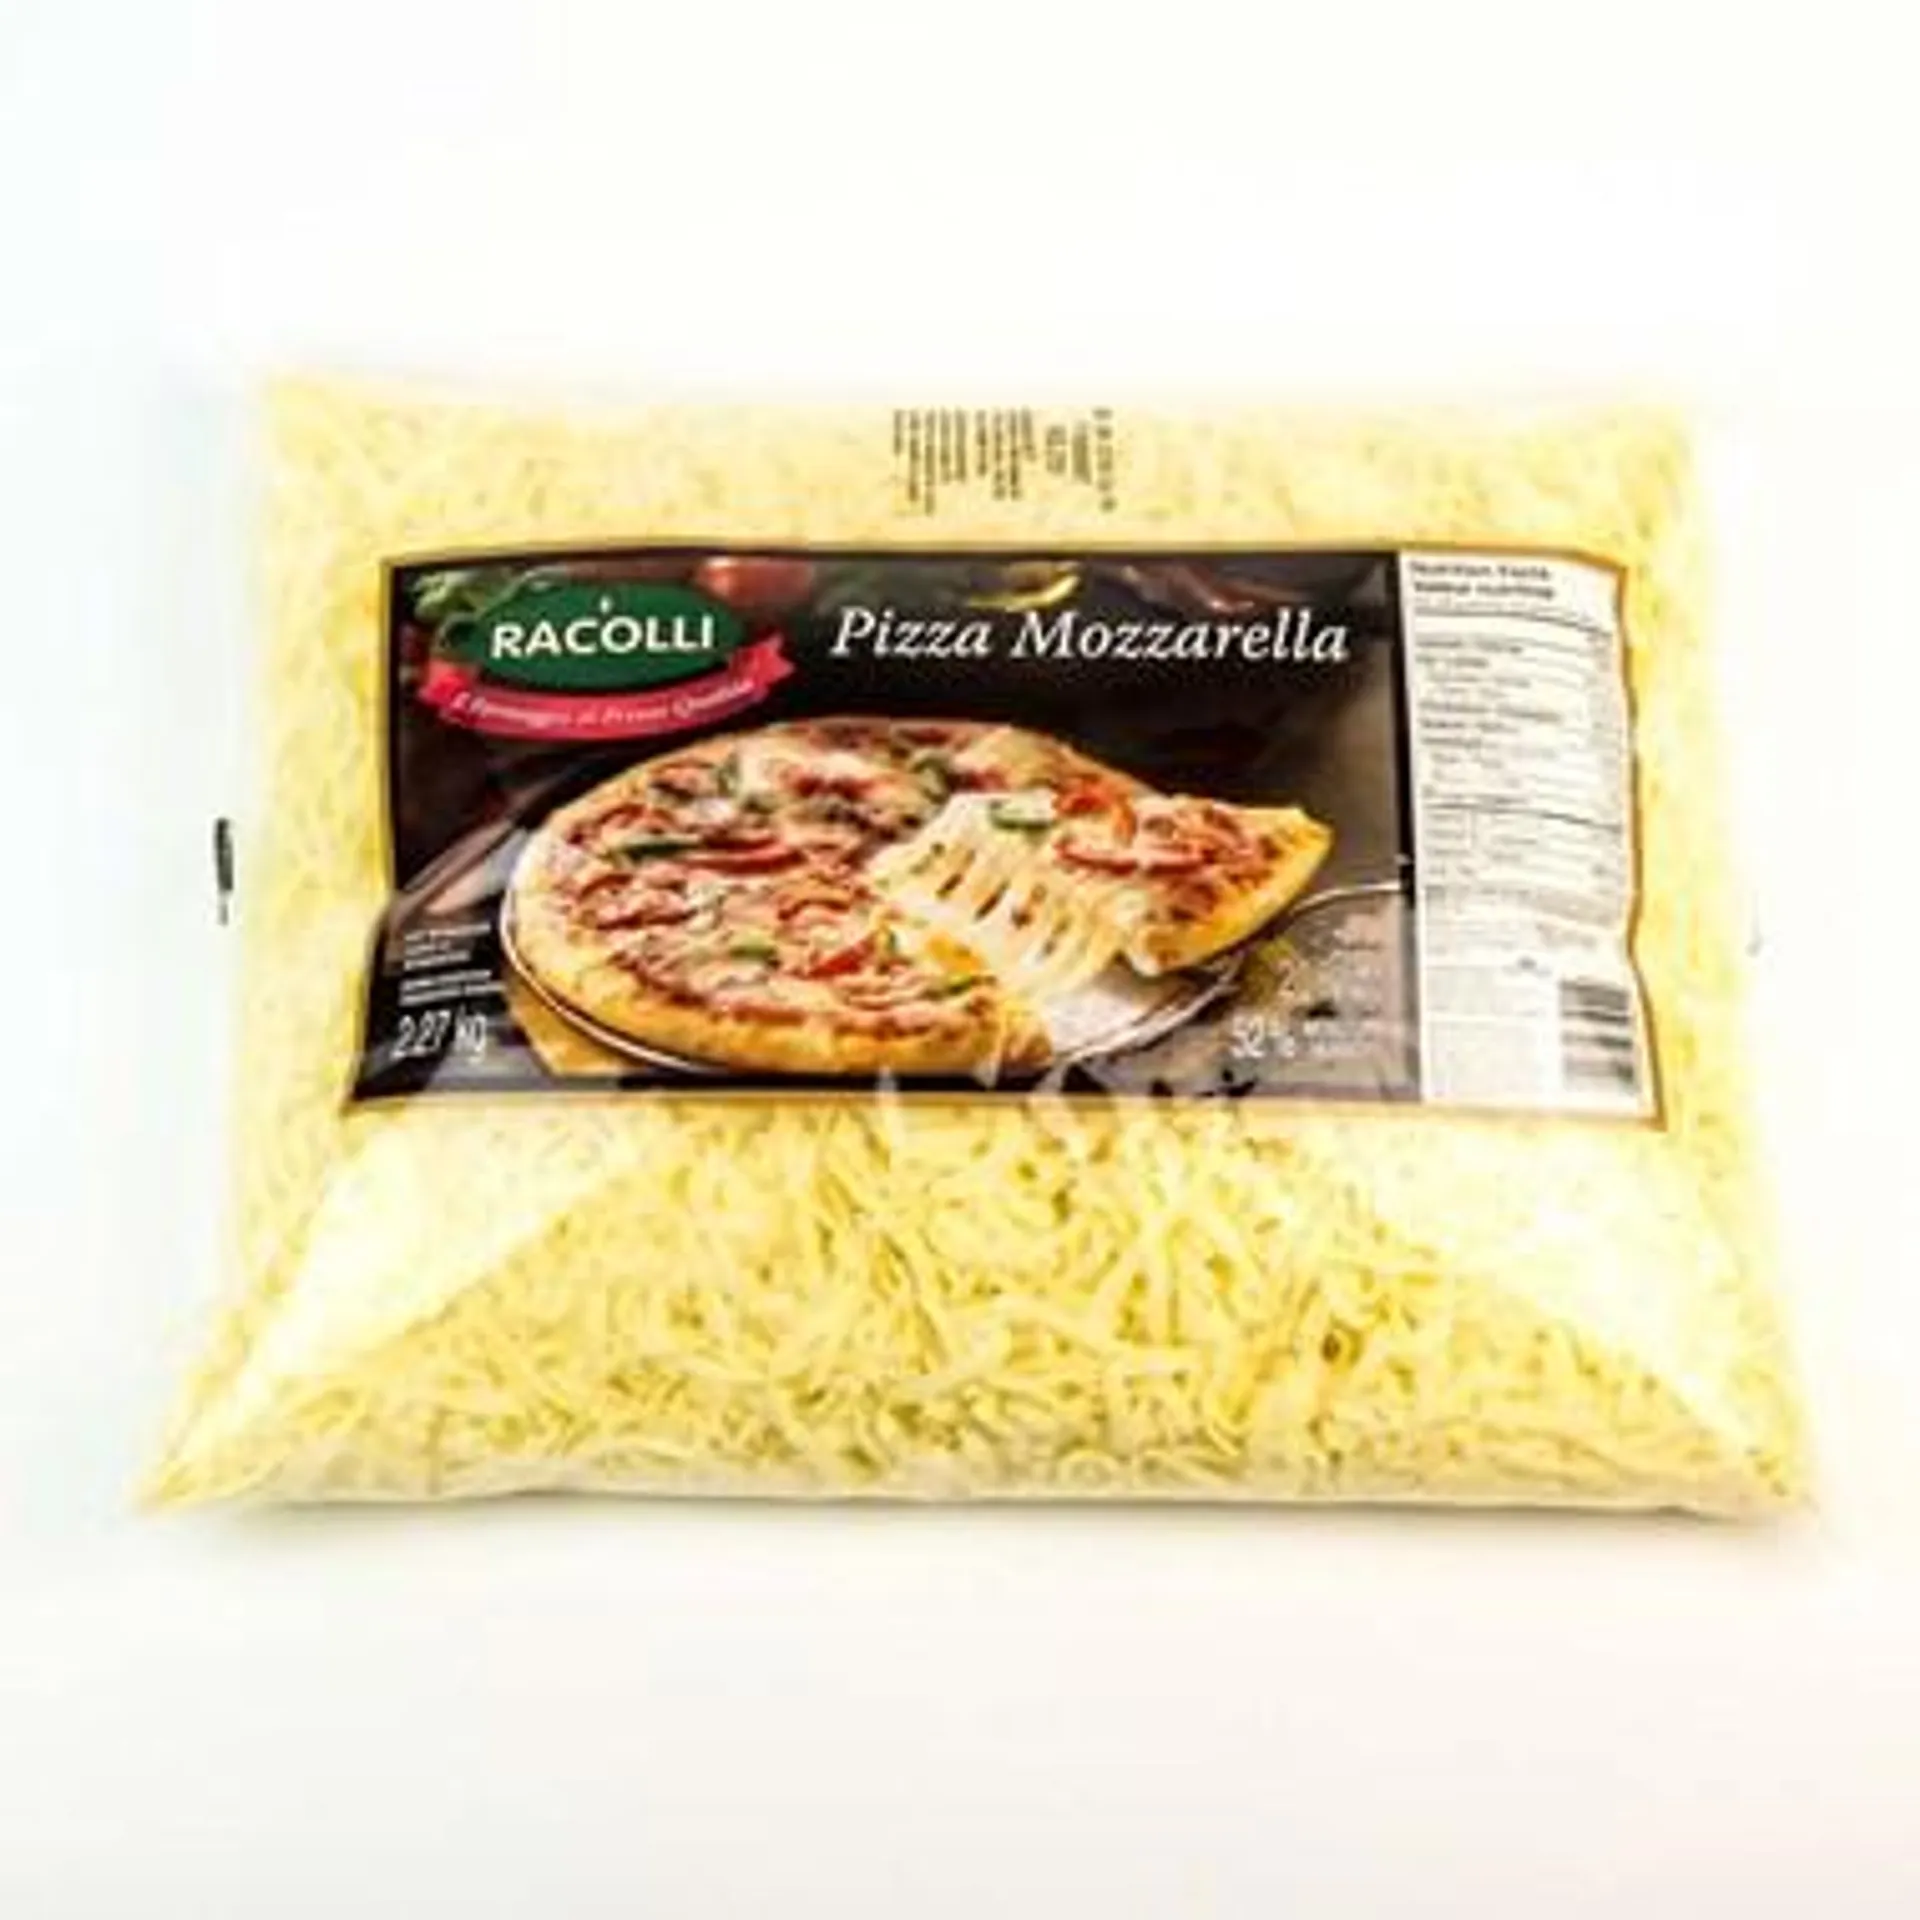 Mozzarella râpée 21% 2,27 kg